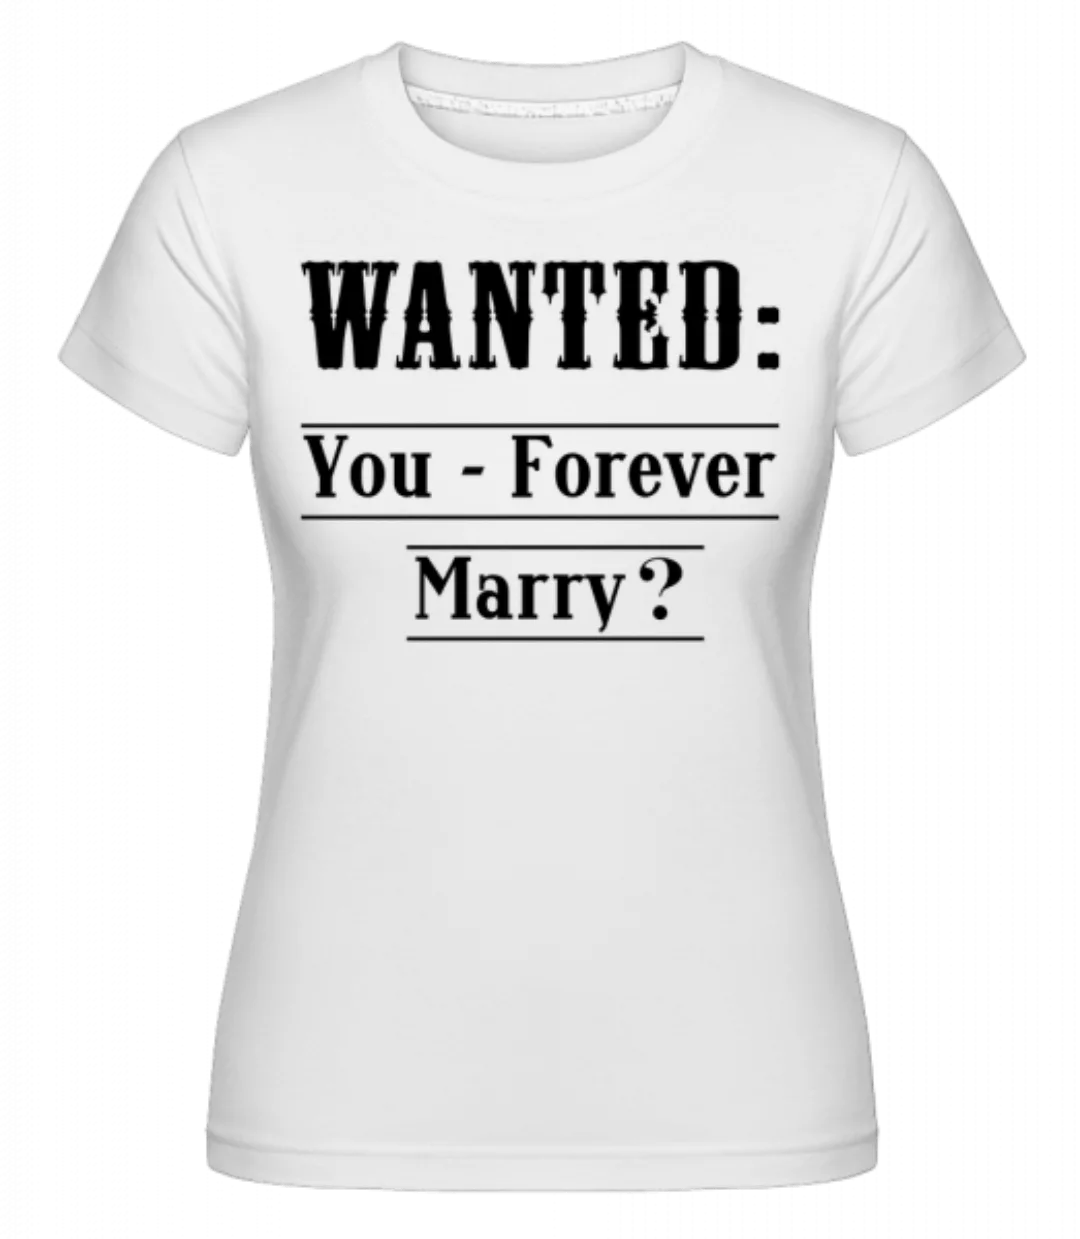 Wanted: You - Forever Marry? · Shirtinator Frauen T-Shirt günstig online kaufen